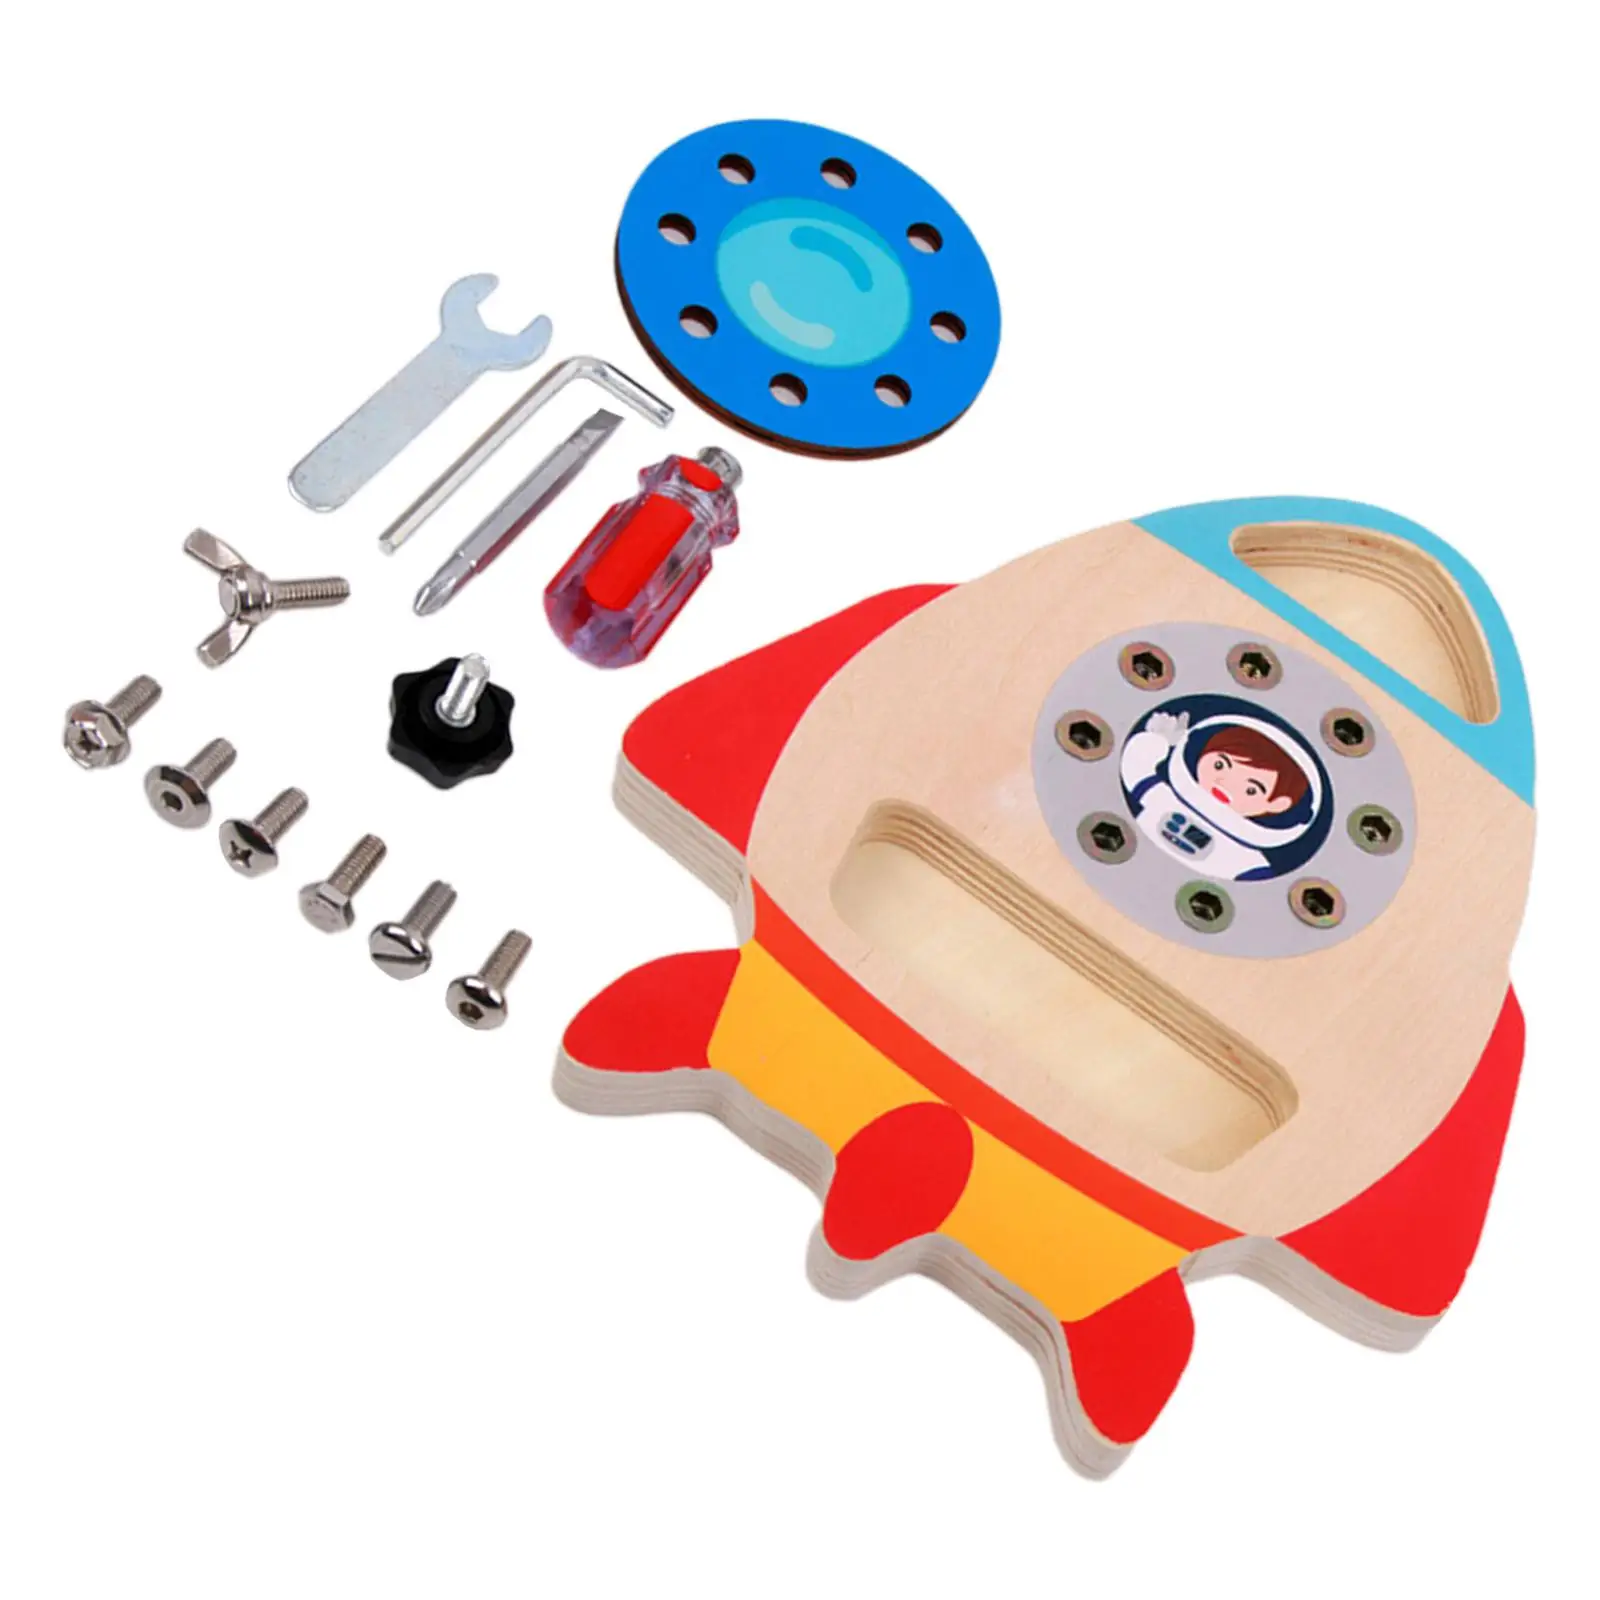 Rocket Screwdriver Board Set Educational Sensory Learning Toy Develop Fine Motor Skills Construction Set